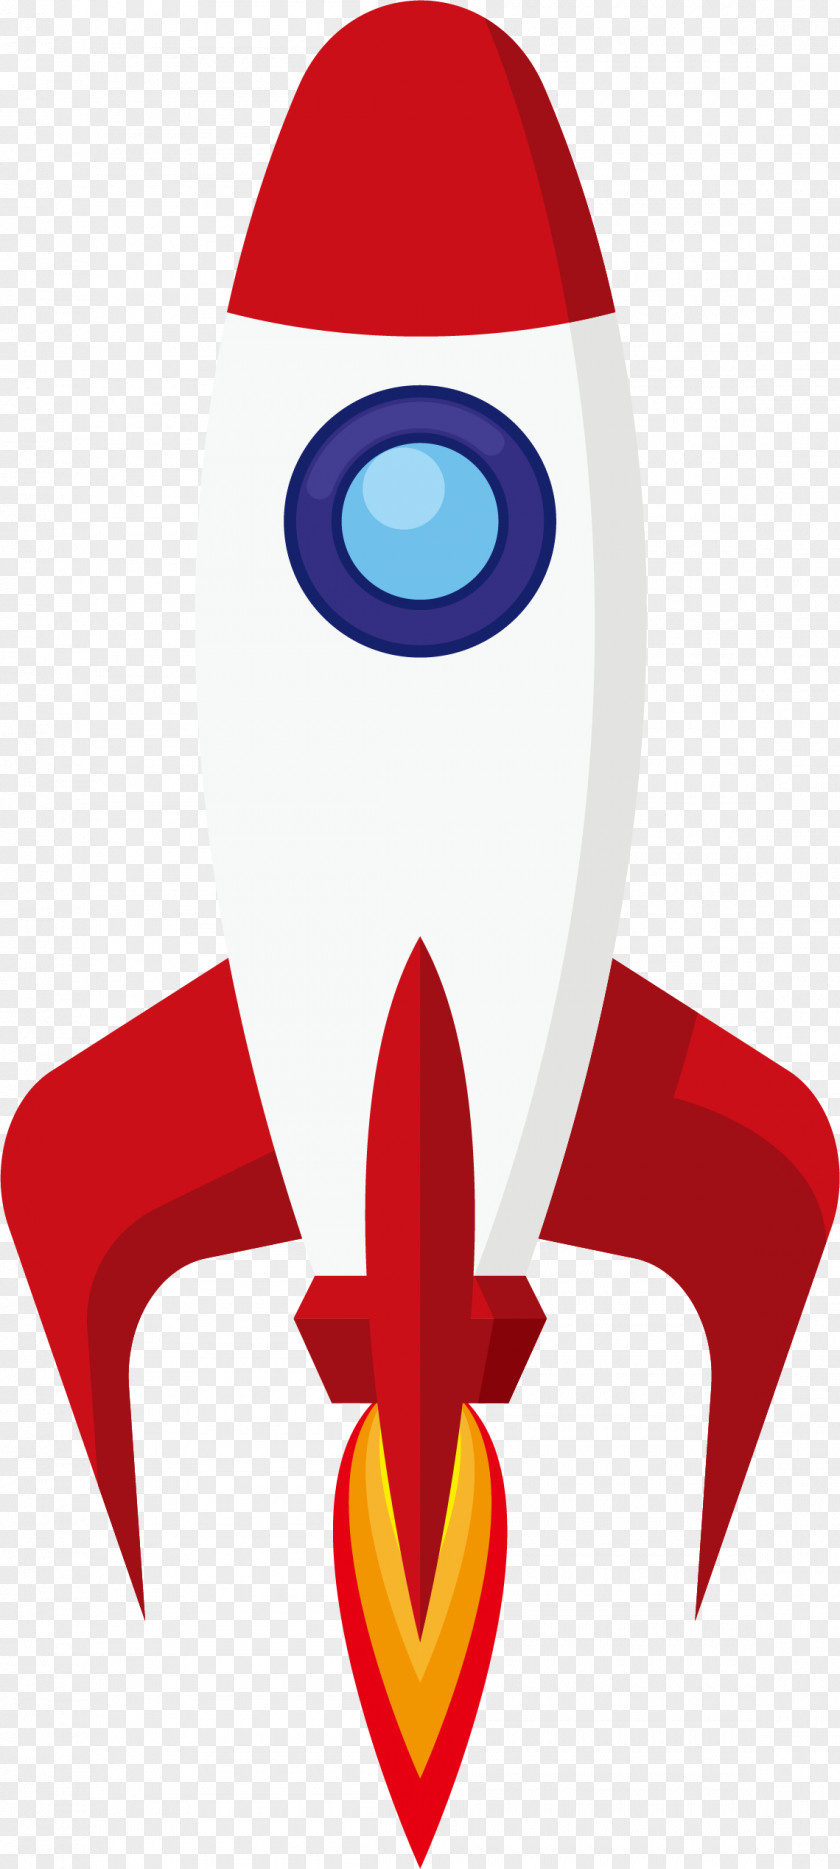 Cartoon Rocket Launching Spacecraft Caricature Clip Art PNG